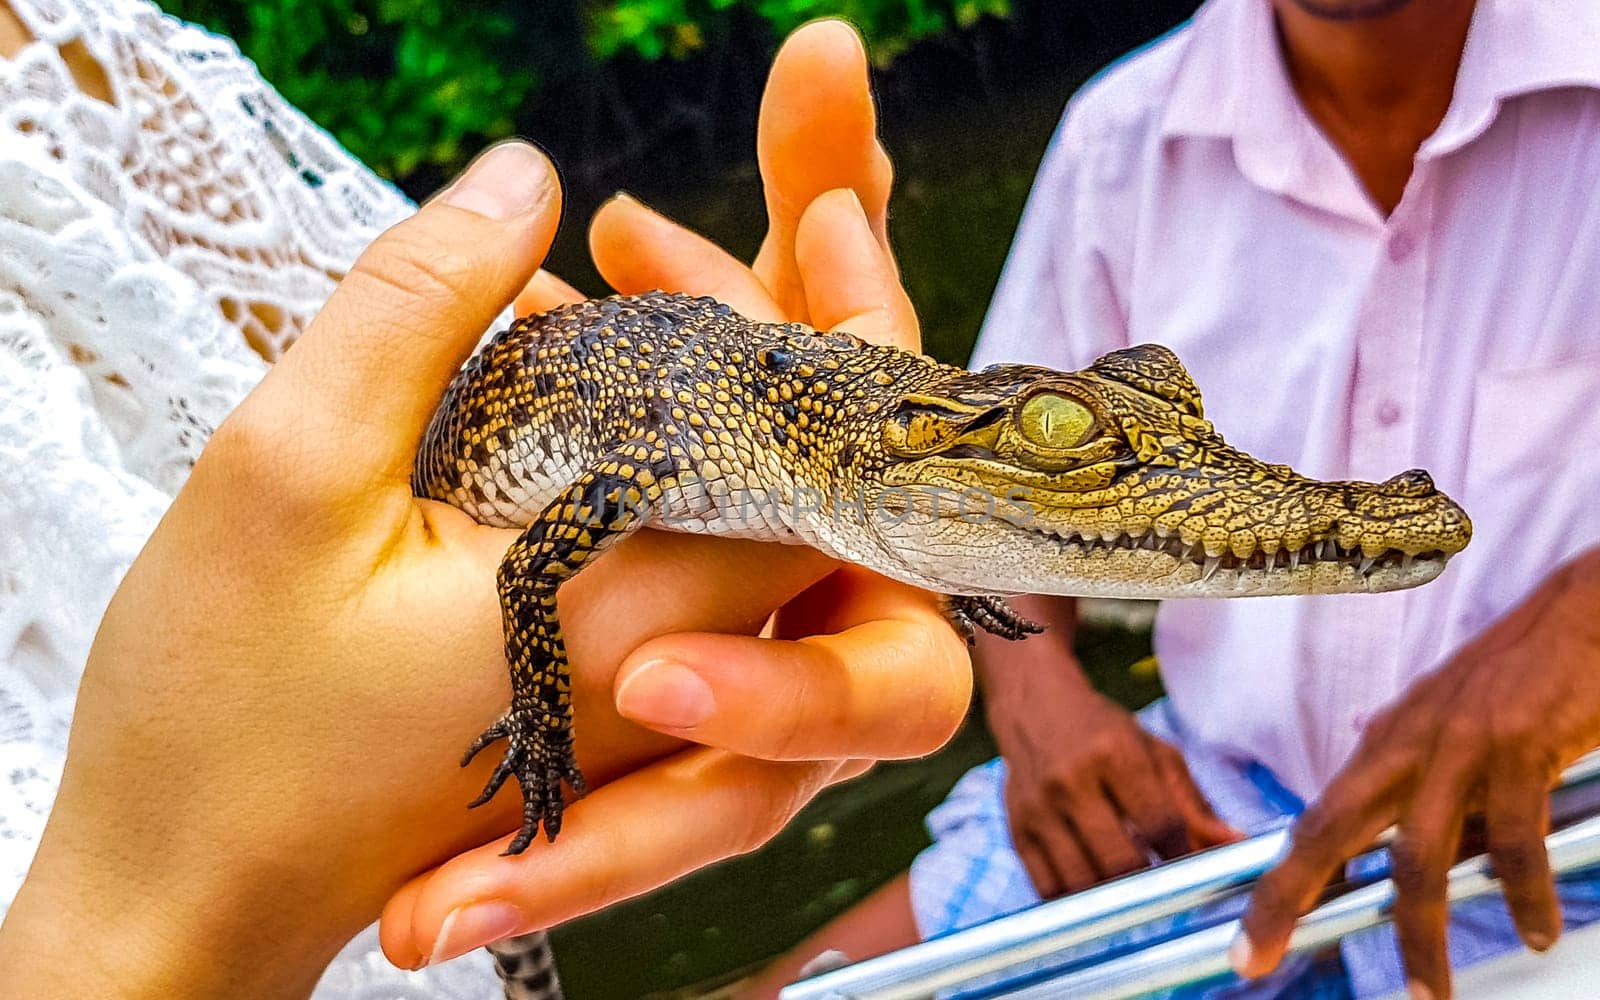 Baby crocodile holding in hand at Boat Safari in Bentota Ganga river mangrove jungle in Bentota Ganga river Bentota Beach Galle District Southern Province Sri Lanka.